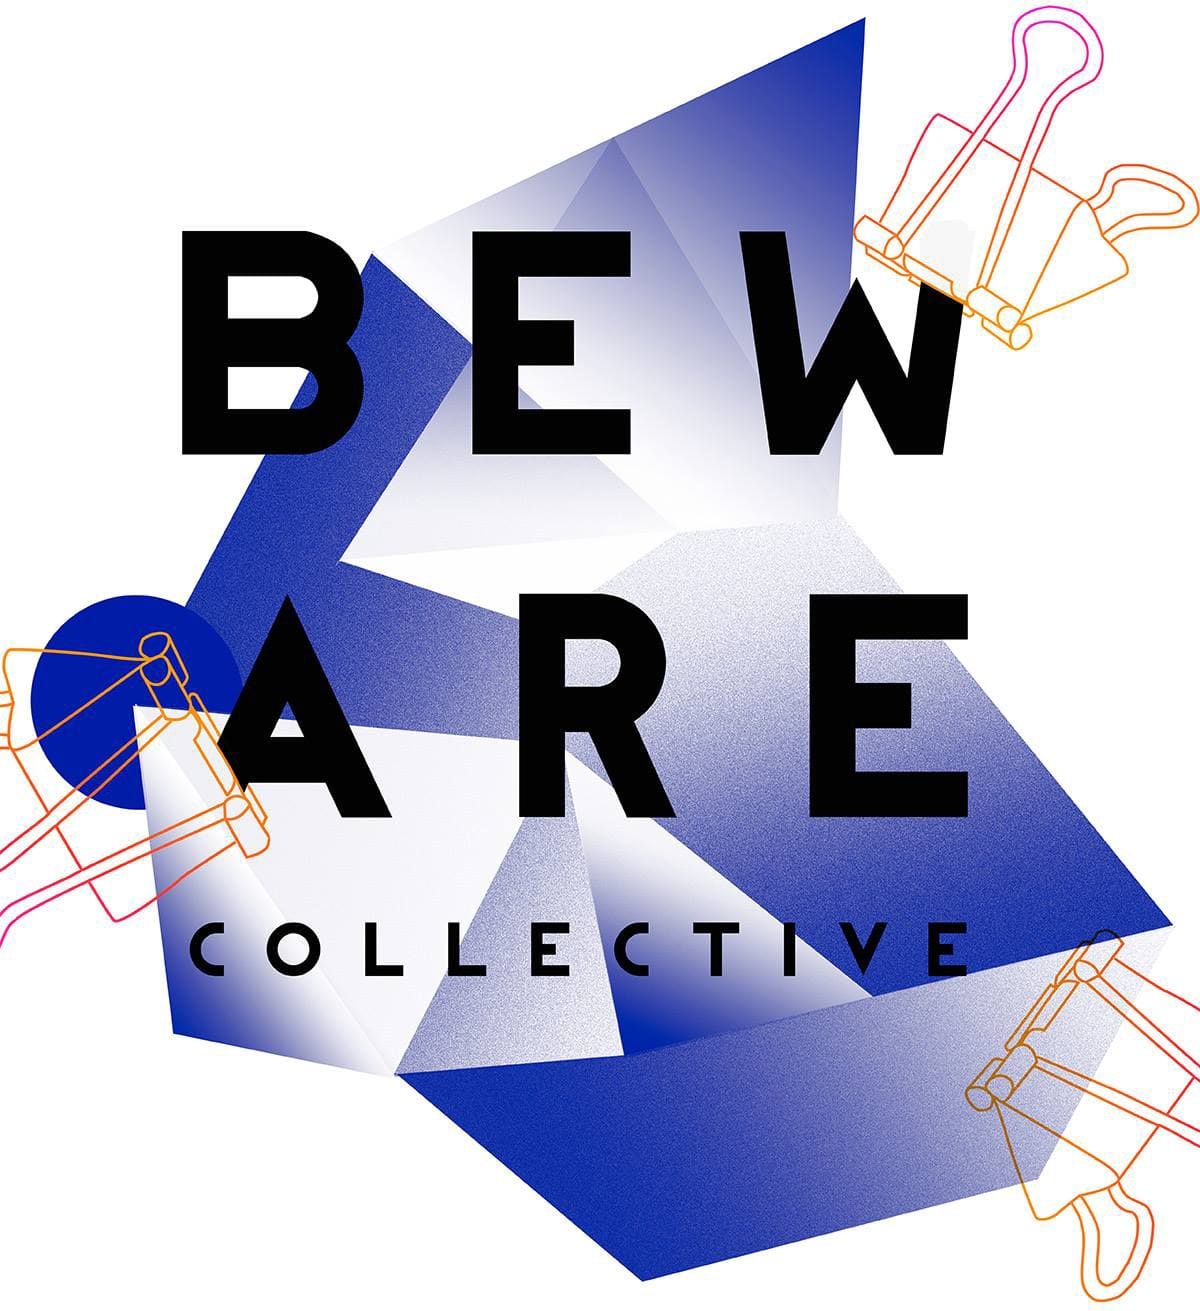 Beware Collective investit le Batofar le mardi 15 juillet 2014 ! 1